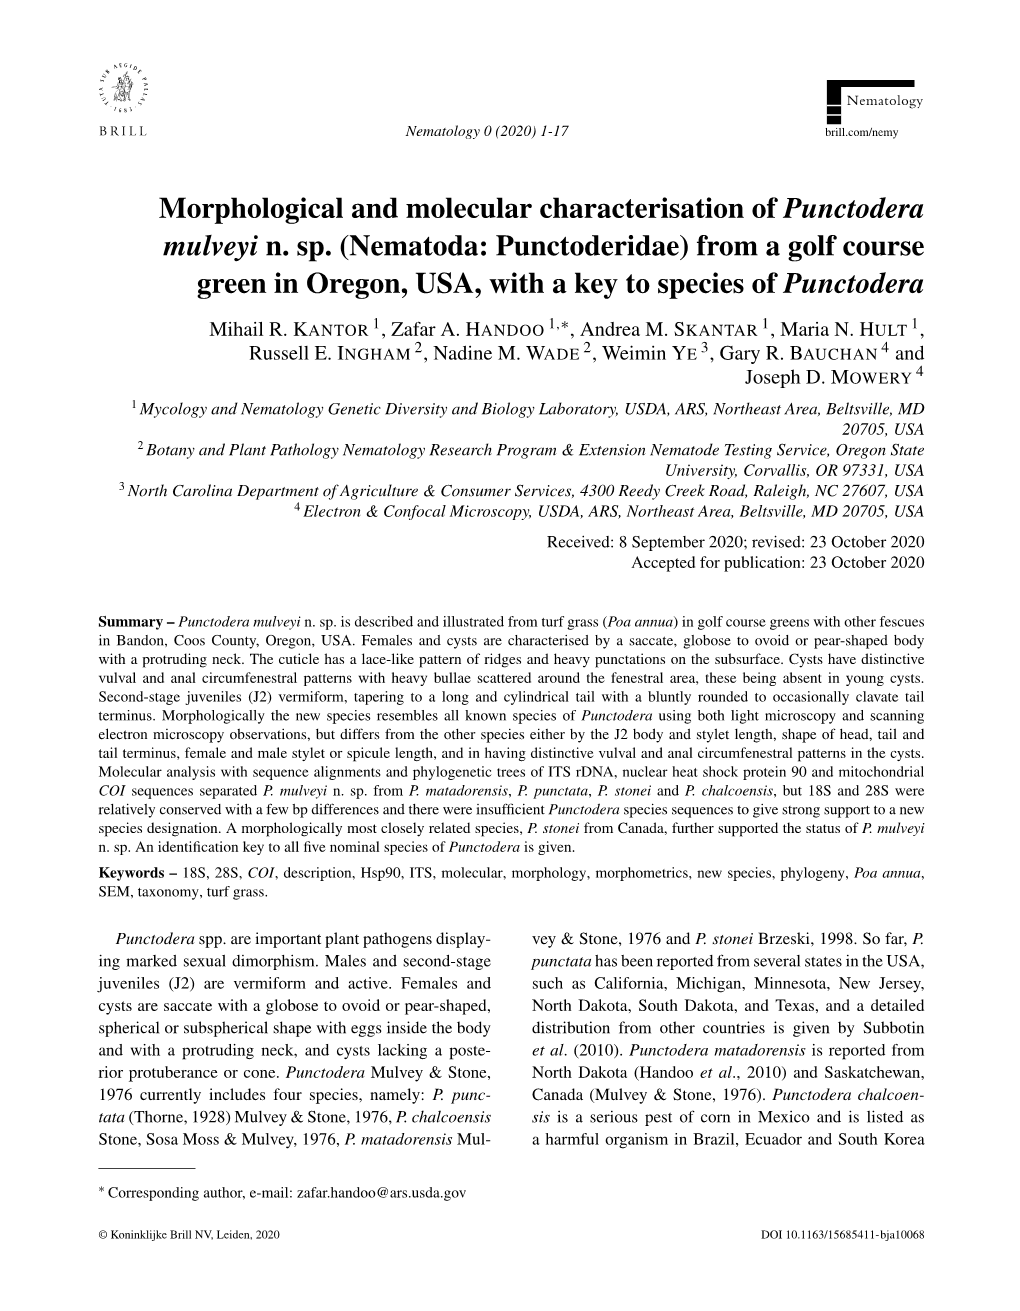 Morphological and Molecular Characterisation of Punctodera Mulveyi N